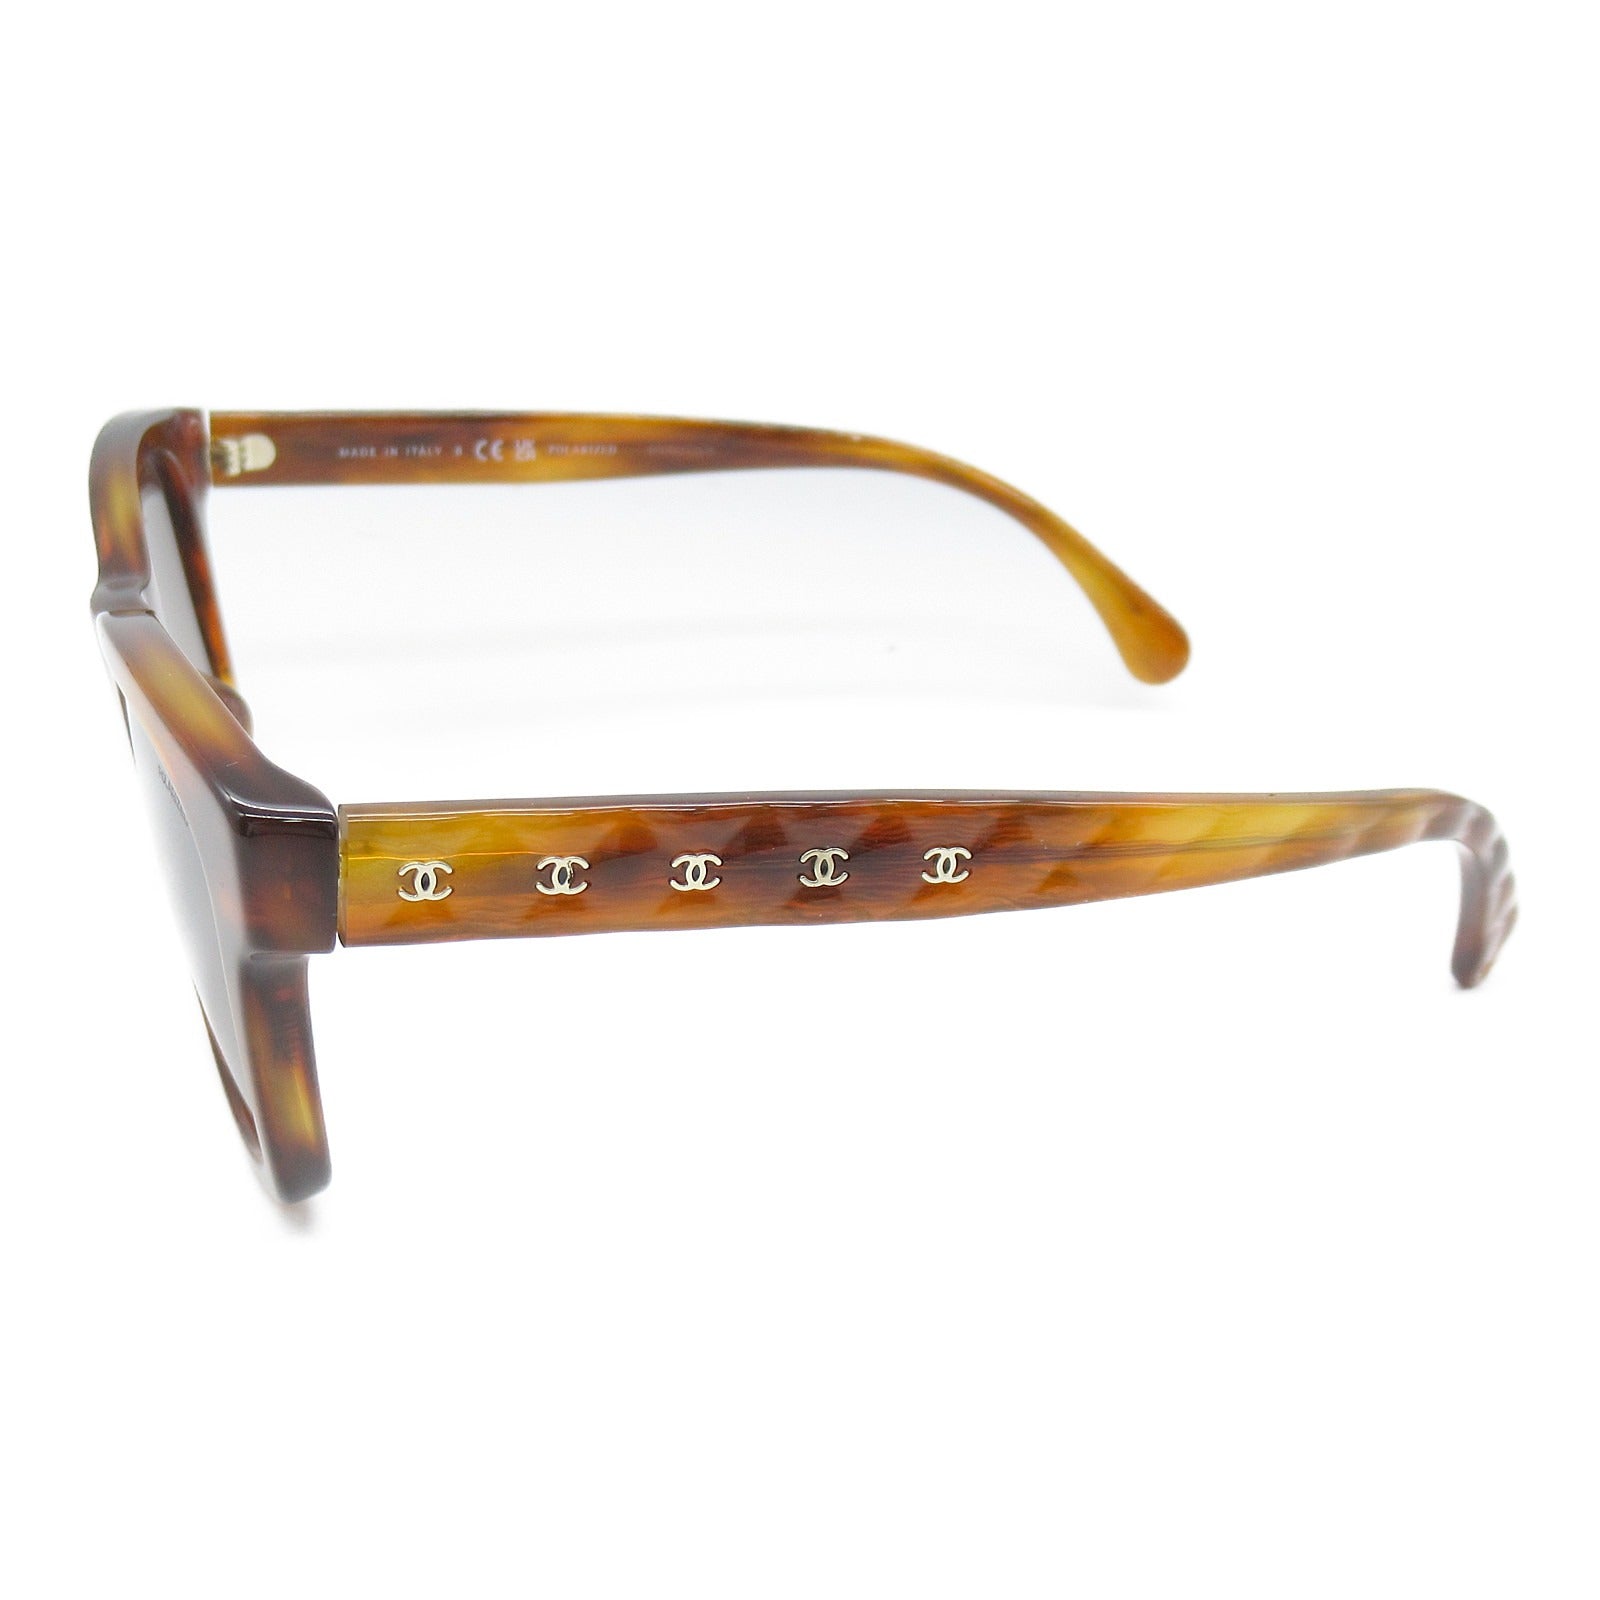 Chanel Sunglasses Brown 5484 107